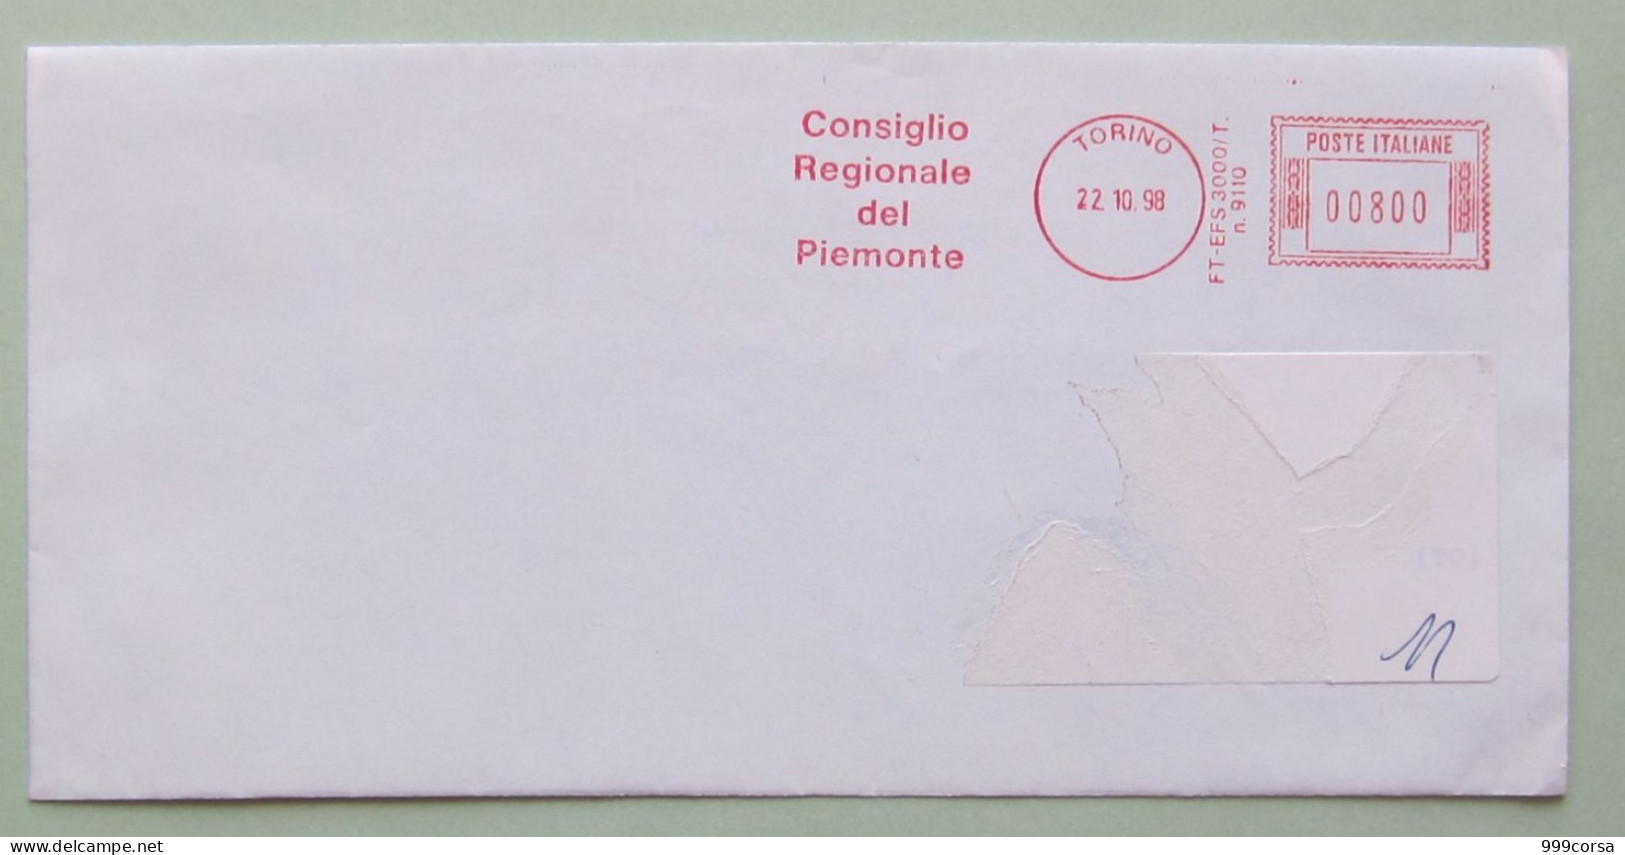 Consiglio Regionale Piemonte, 22-10-98, 800 Lire, Politica, Amministrazione, Partiti, Ema, Meter, Freistempel - Machines à Affranchir (EMA)